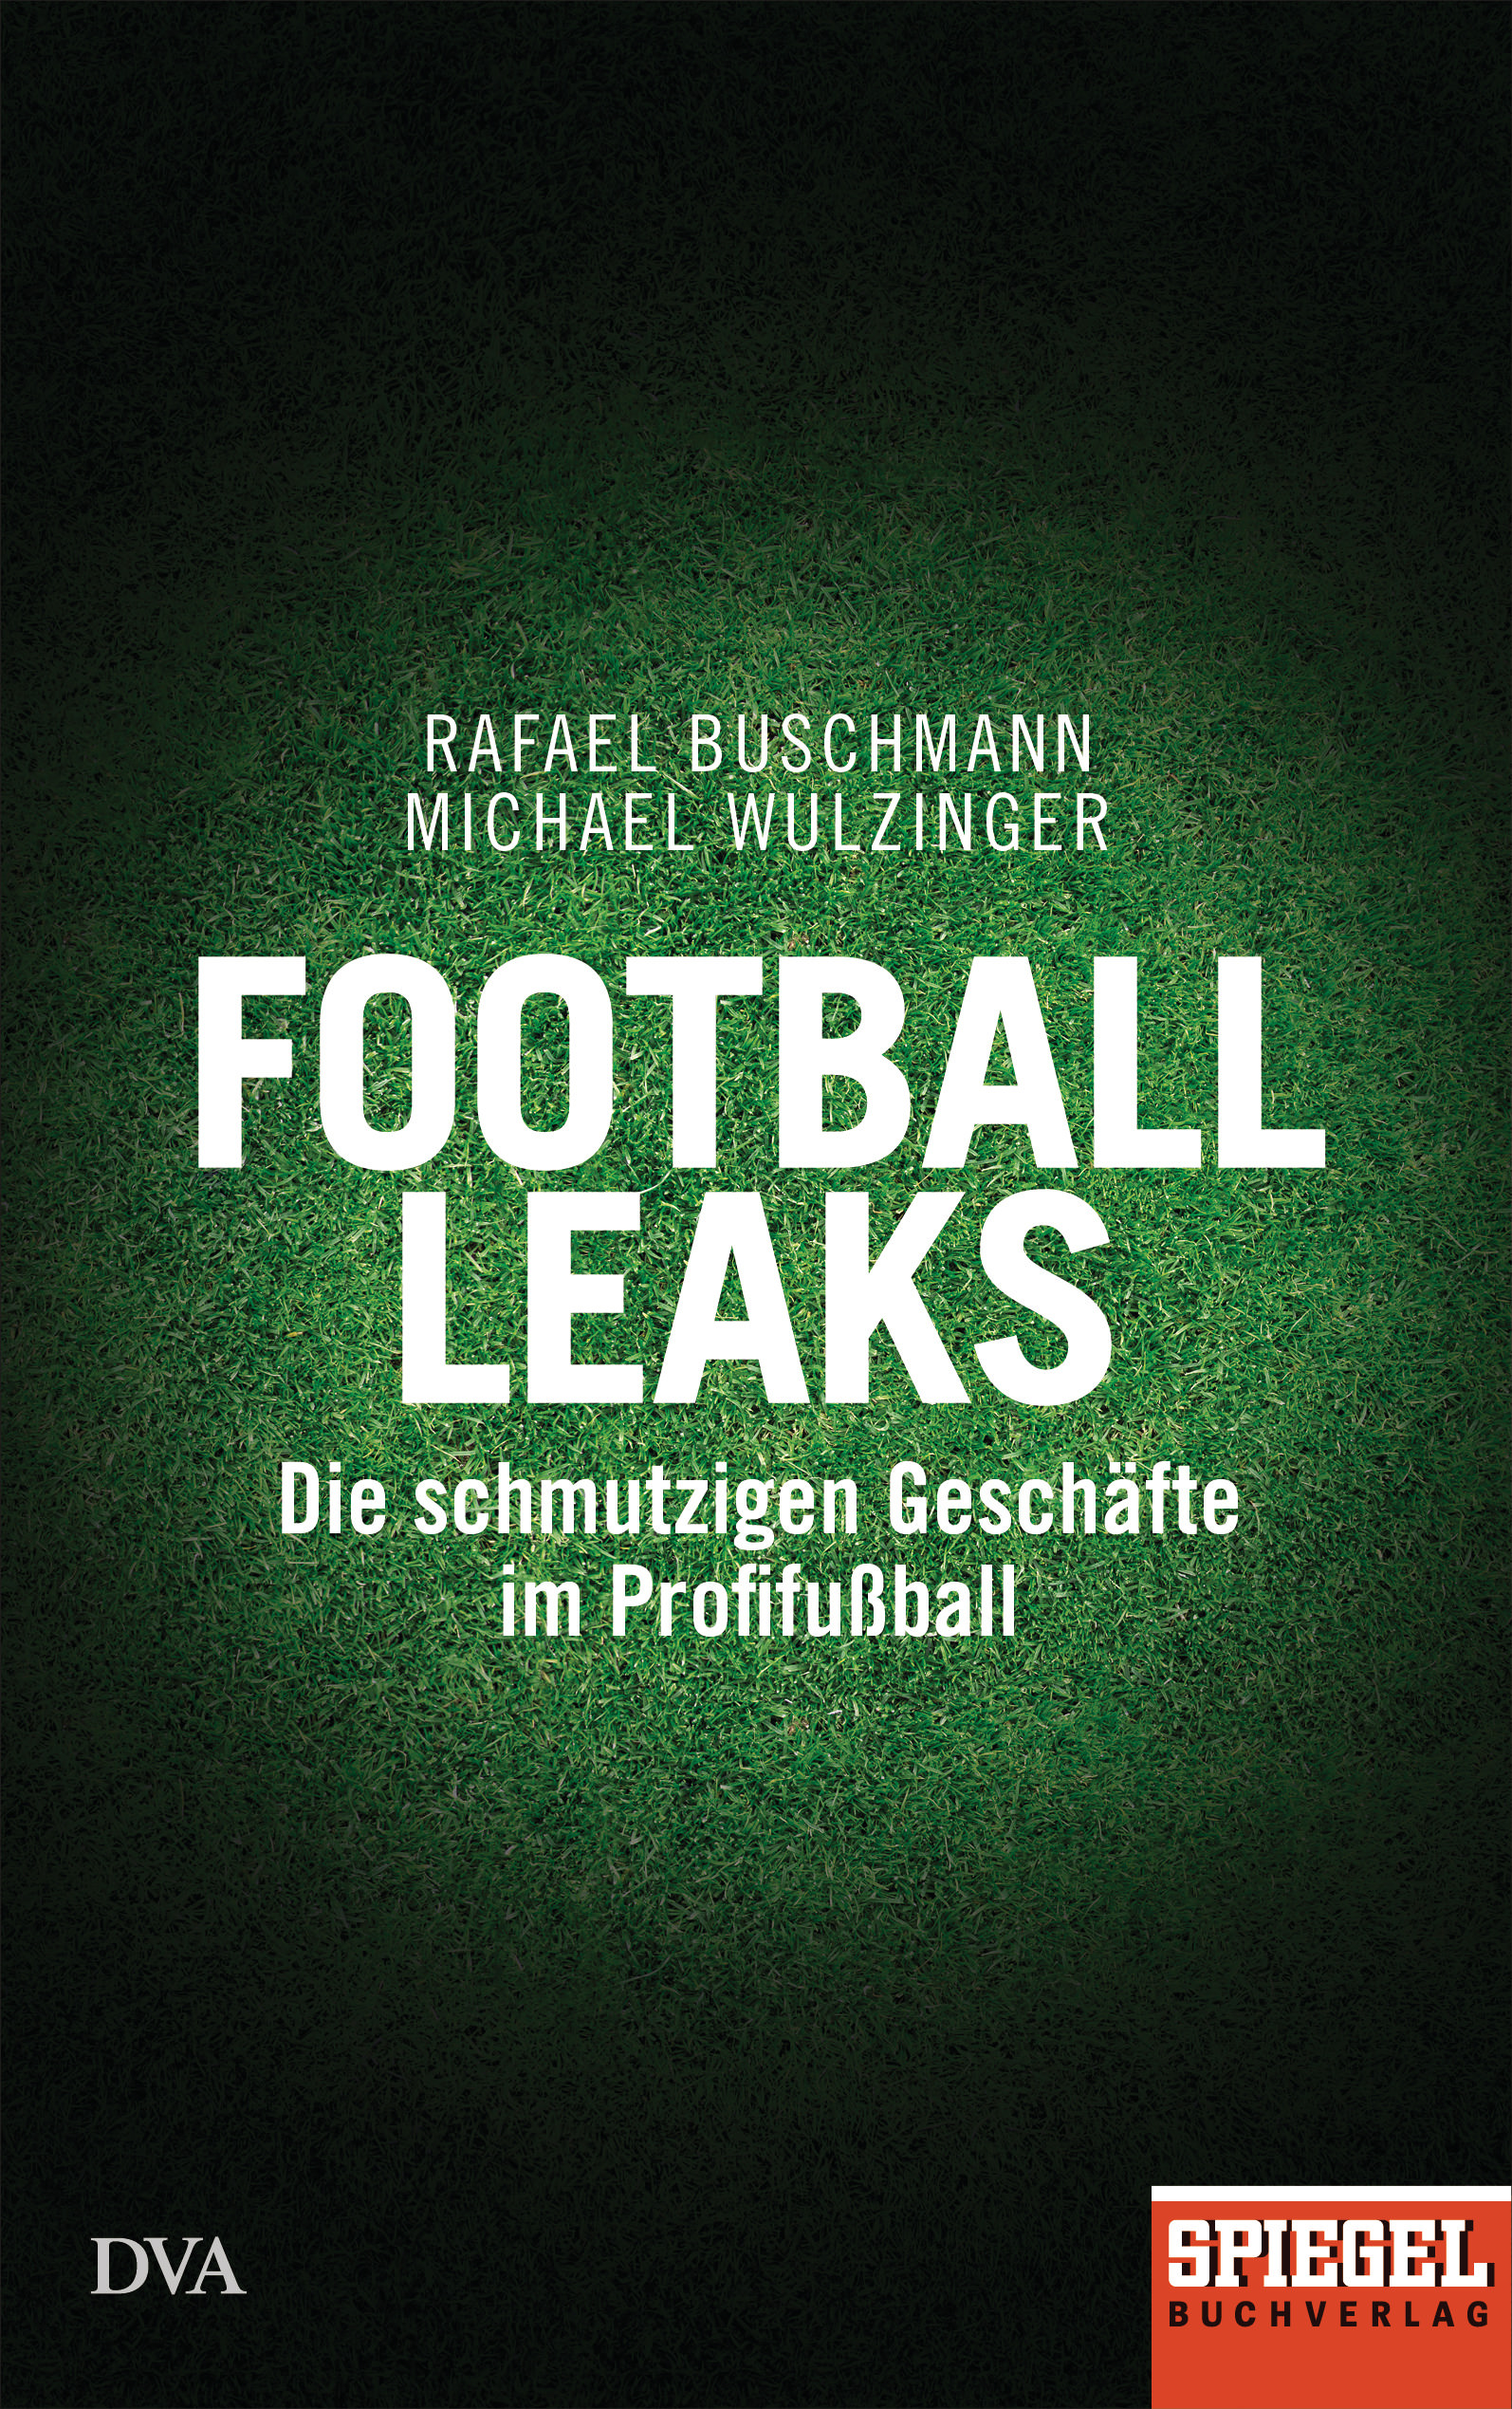 Buchcover: Rafael Buschmann, Michael Wulzinger: Football Leaks. Die schmutzigen Geschäfte im Profifußball. DVA